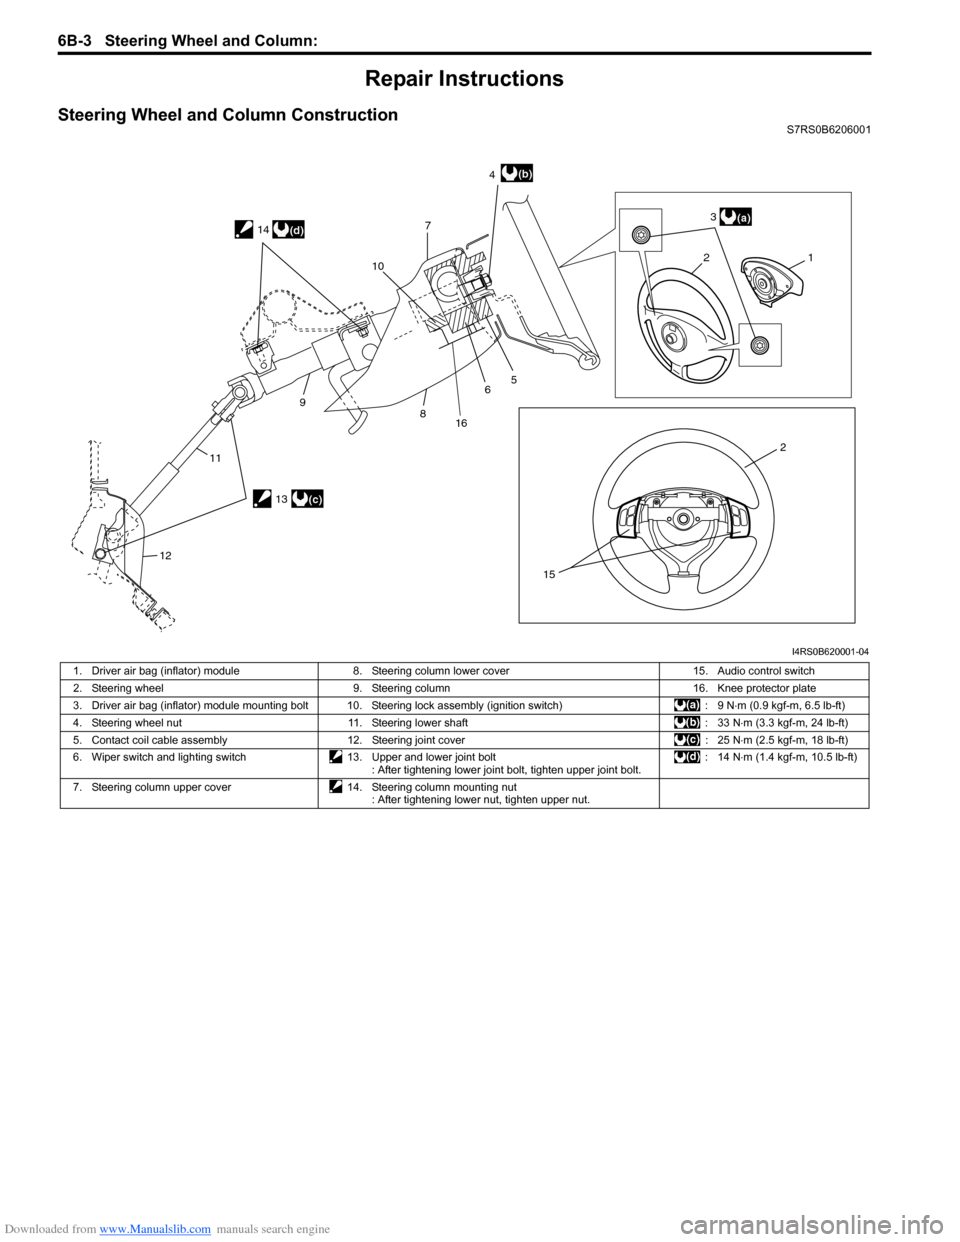 SUZUKI SWIFT 2005 2.G Service Workshop Manual Downloaded from www.Manualslib.com manuals search engine 6B-3 Steering Wheel and Column: 
Repair Instructions
Steering Wheel and Column ConstructionS7RS0B6206001
21
2 3
4
7
5
6
8
9
11
12 10
15
(a)
(b)